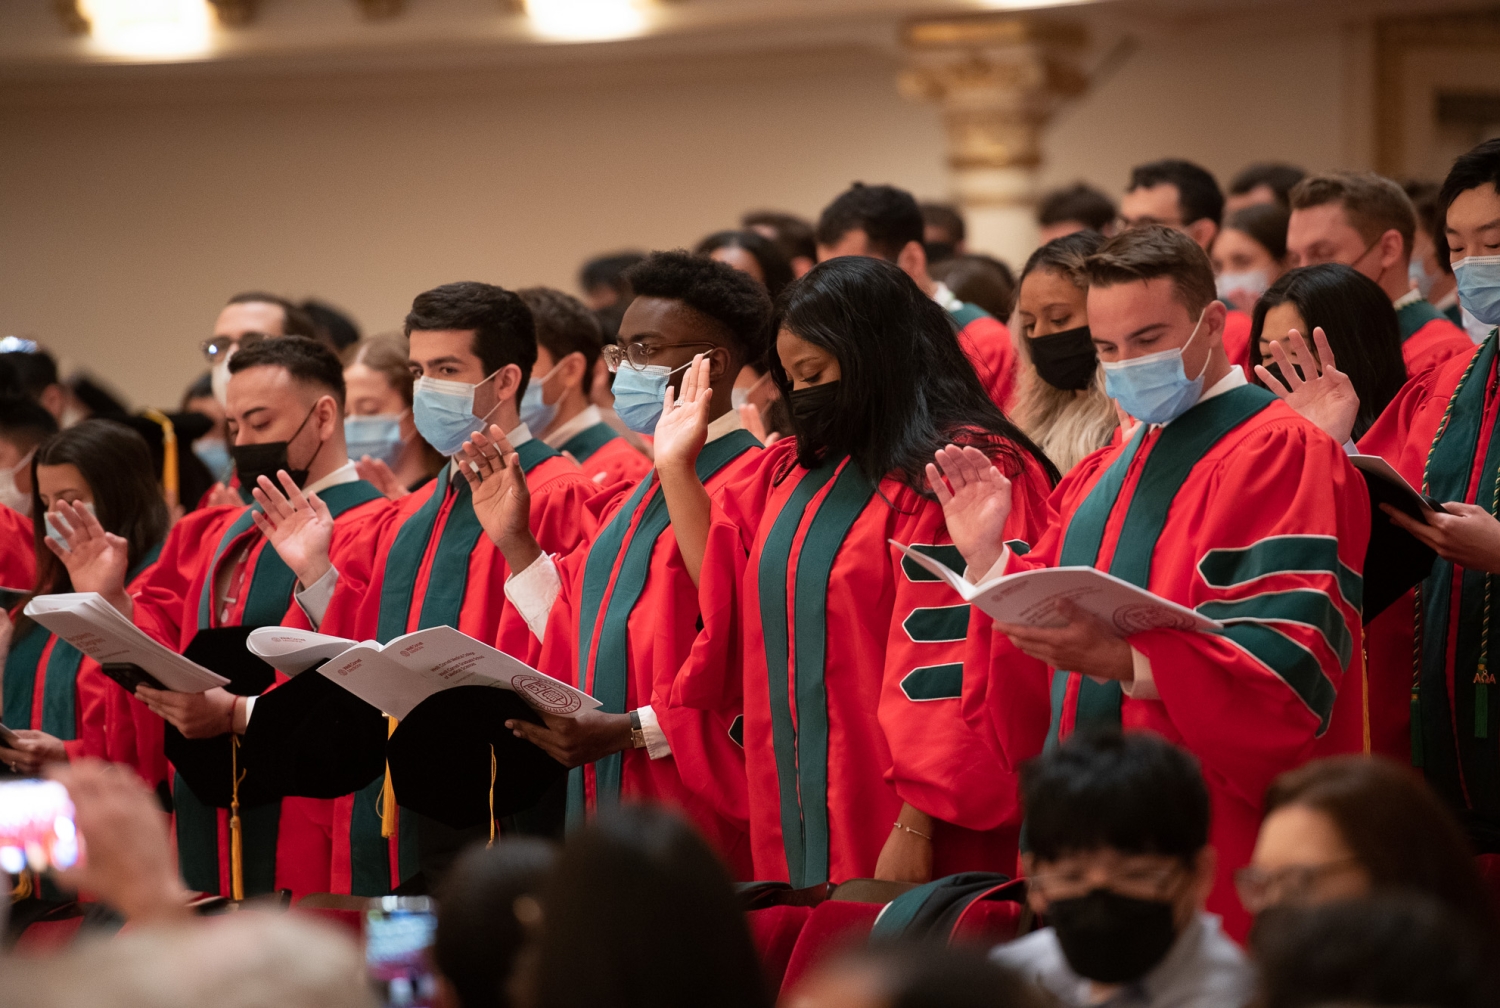 students at graduation reciting the Hippocratic oath.